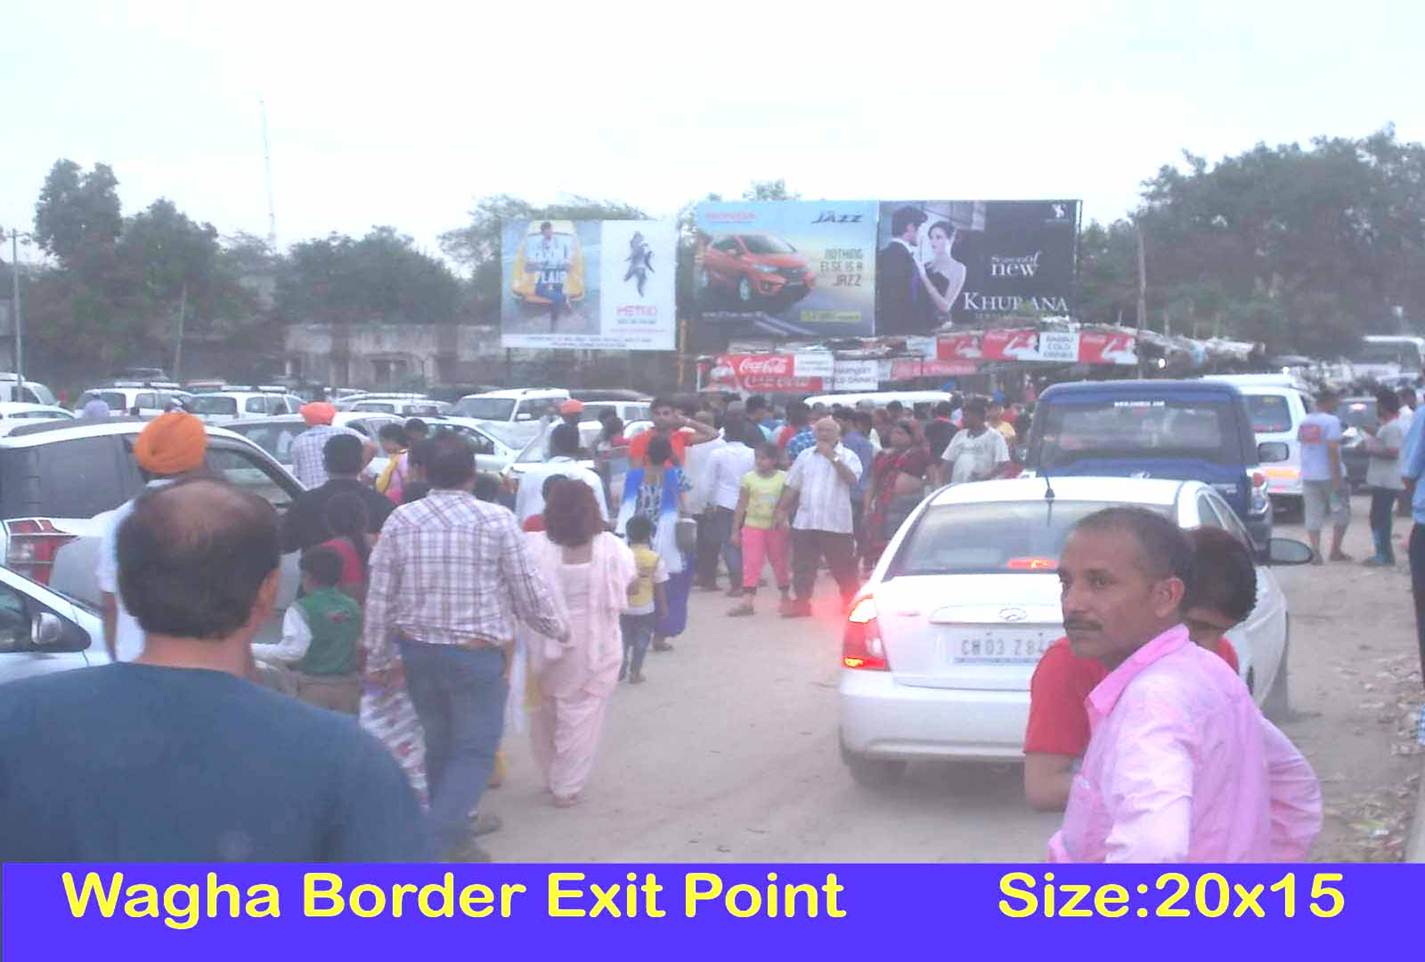 Wagha Border Main Exit Point, Amritsar